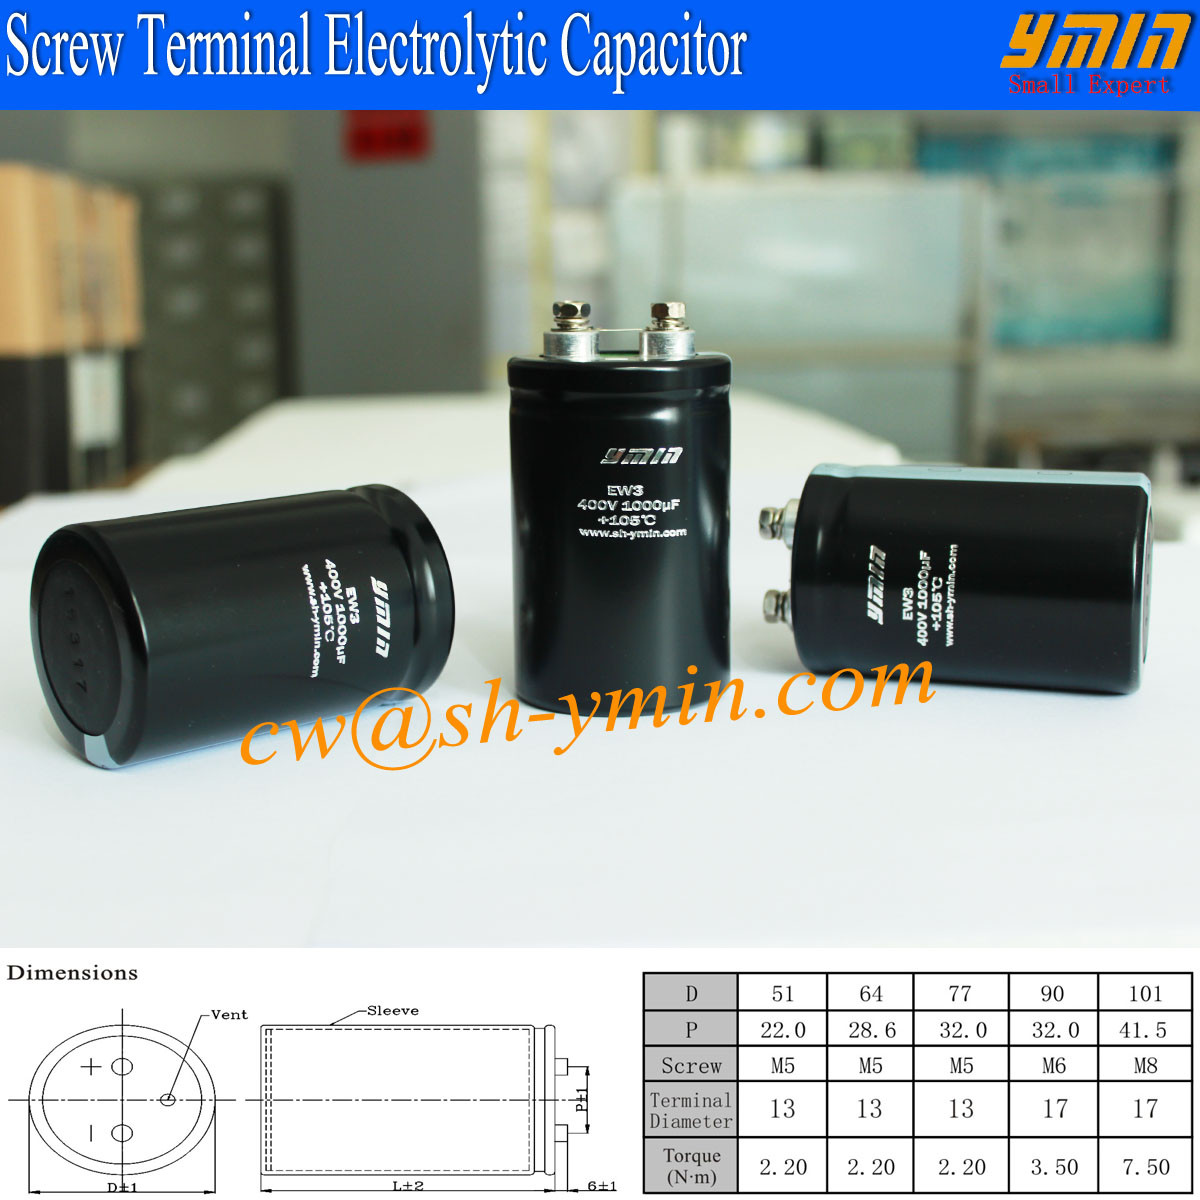  400V 1000uF Capacitor Screw Bolt Terminal Aluminum Electrolytic Capacitor RoHS Compliant Manufactures